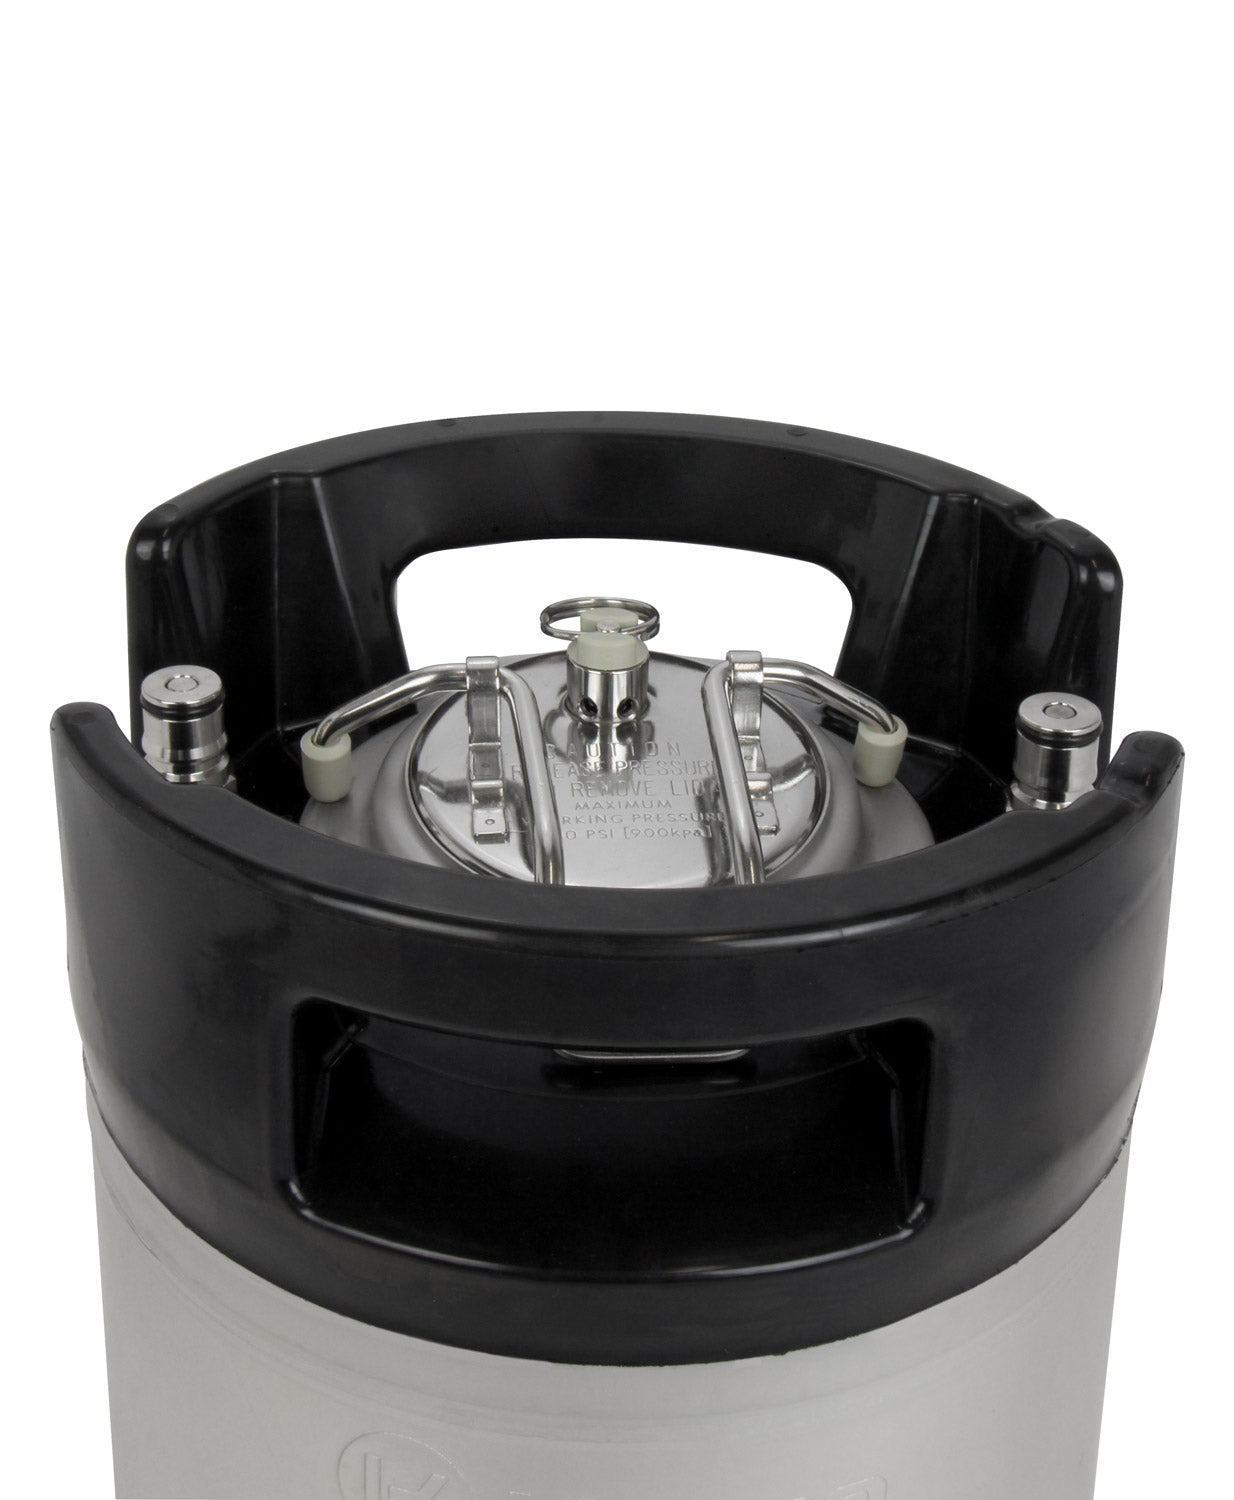 1.75 Gallon Ball Lock Keg - Rubber Handle - Set of 4